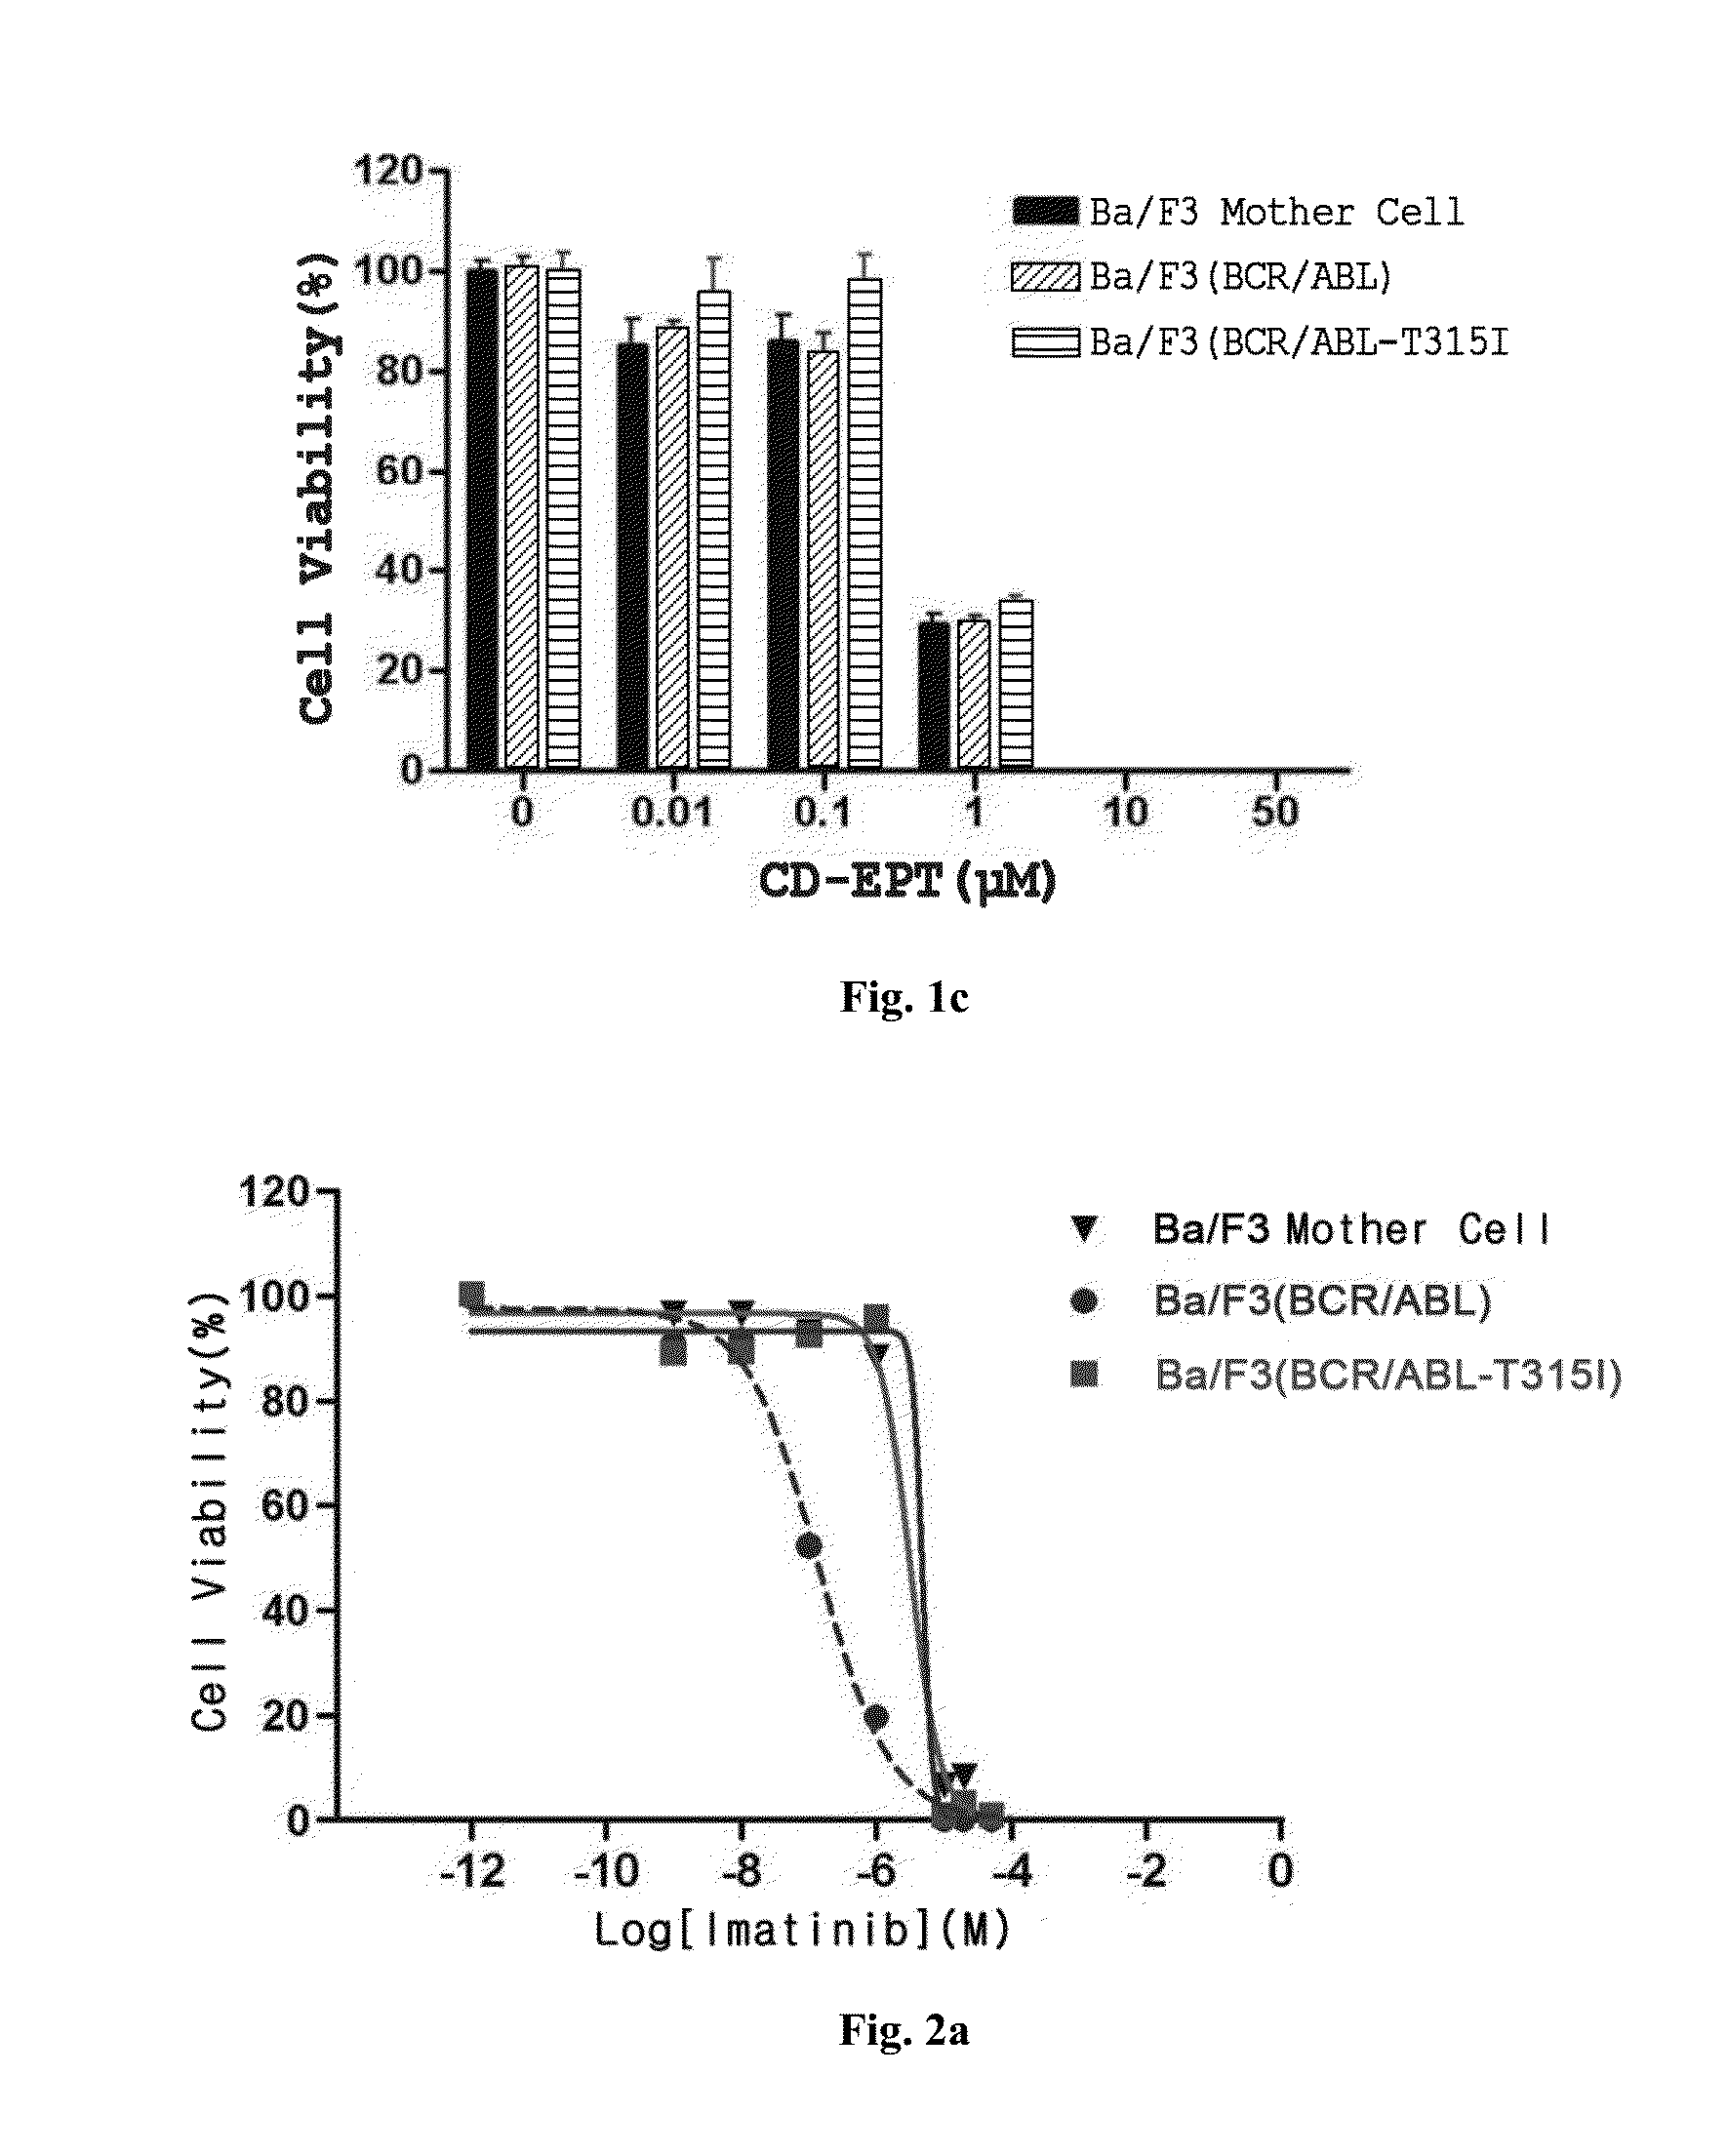 Pharmaceutical composition containing liriodendron tulipifera l. extract for treating chronic myelogenous leukemia